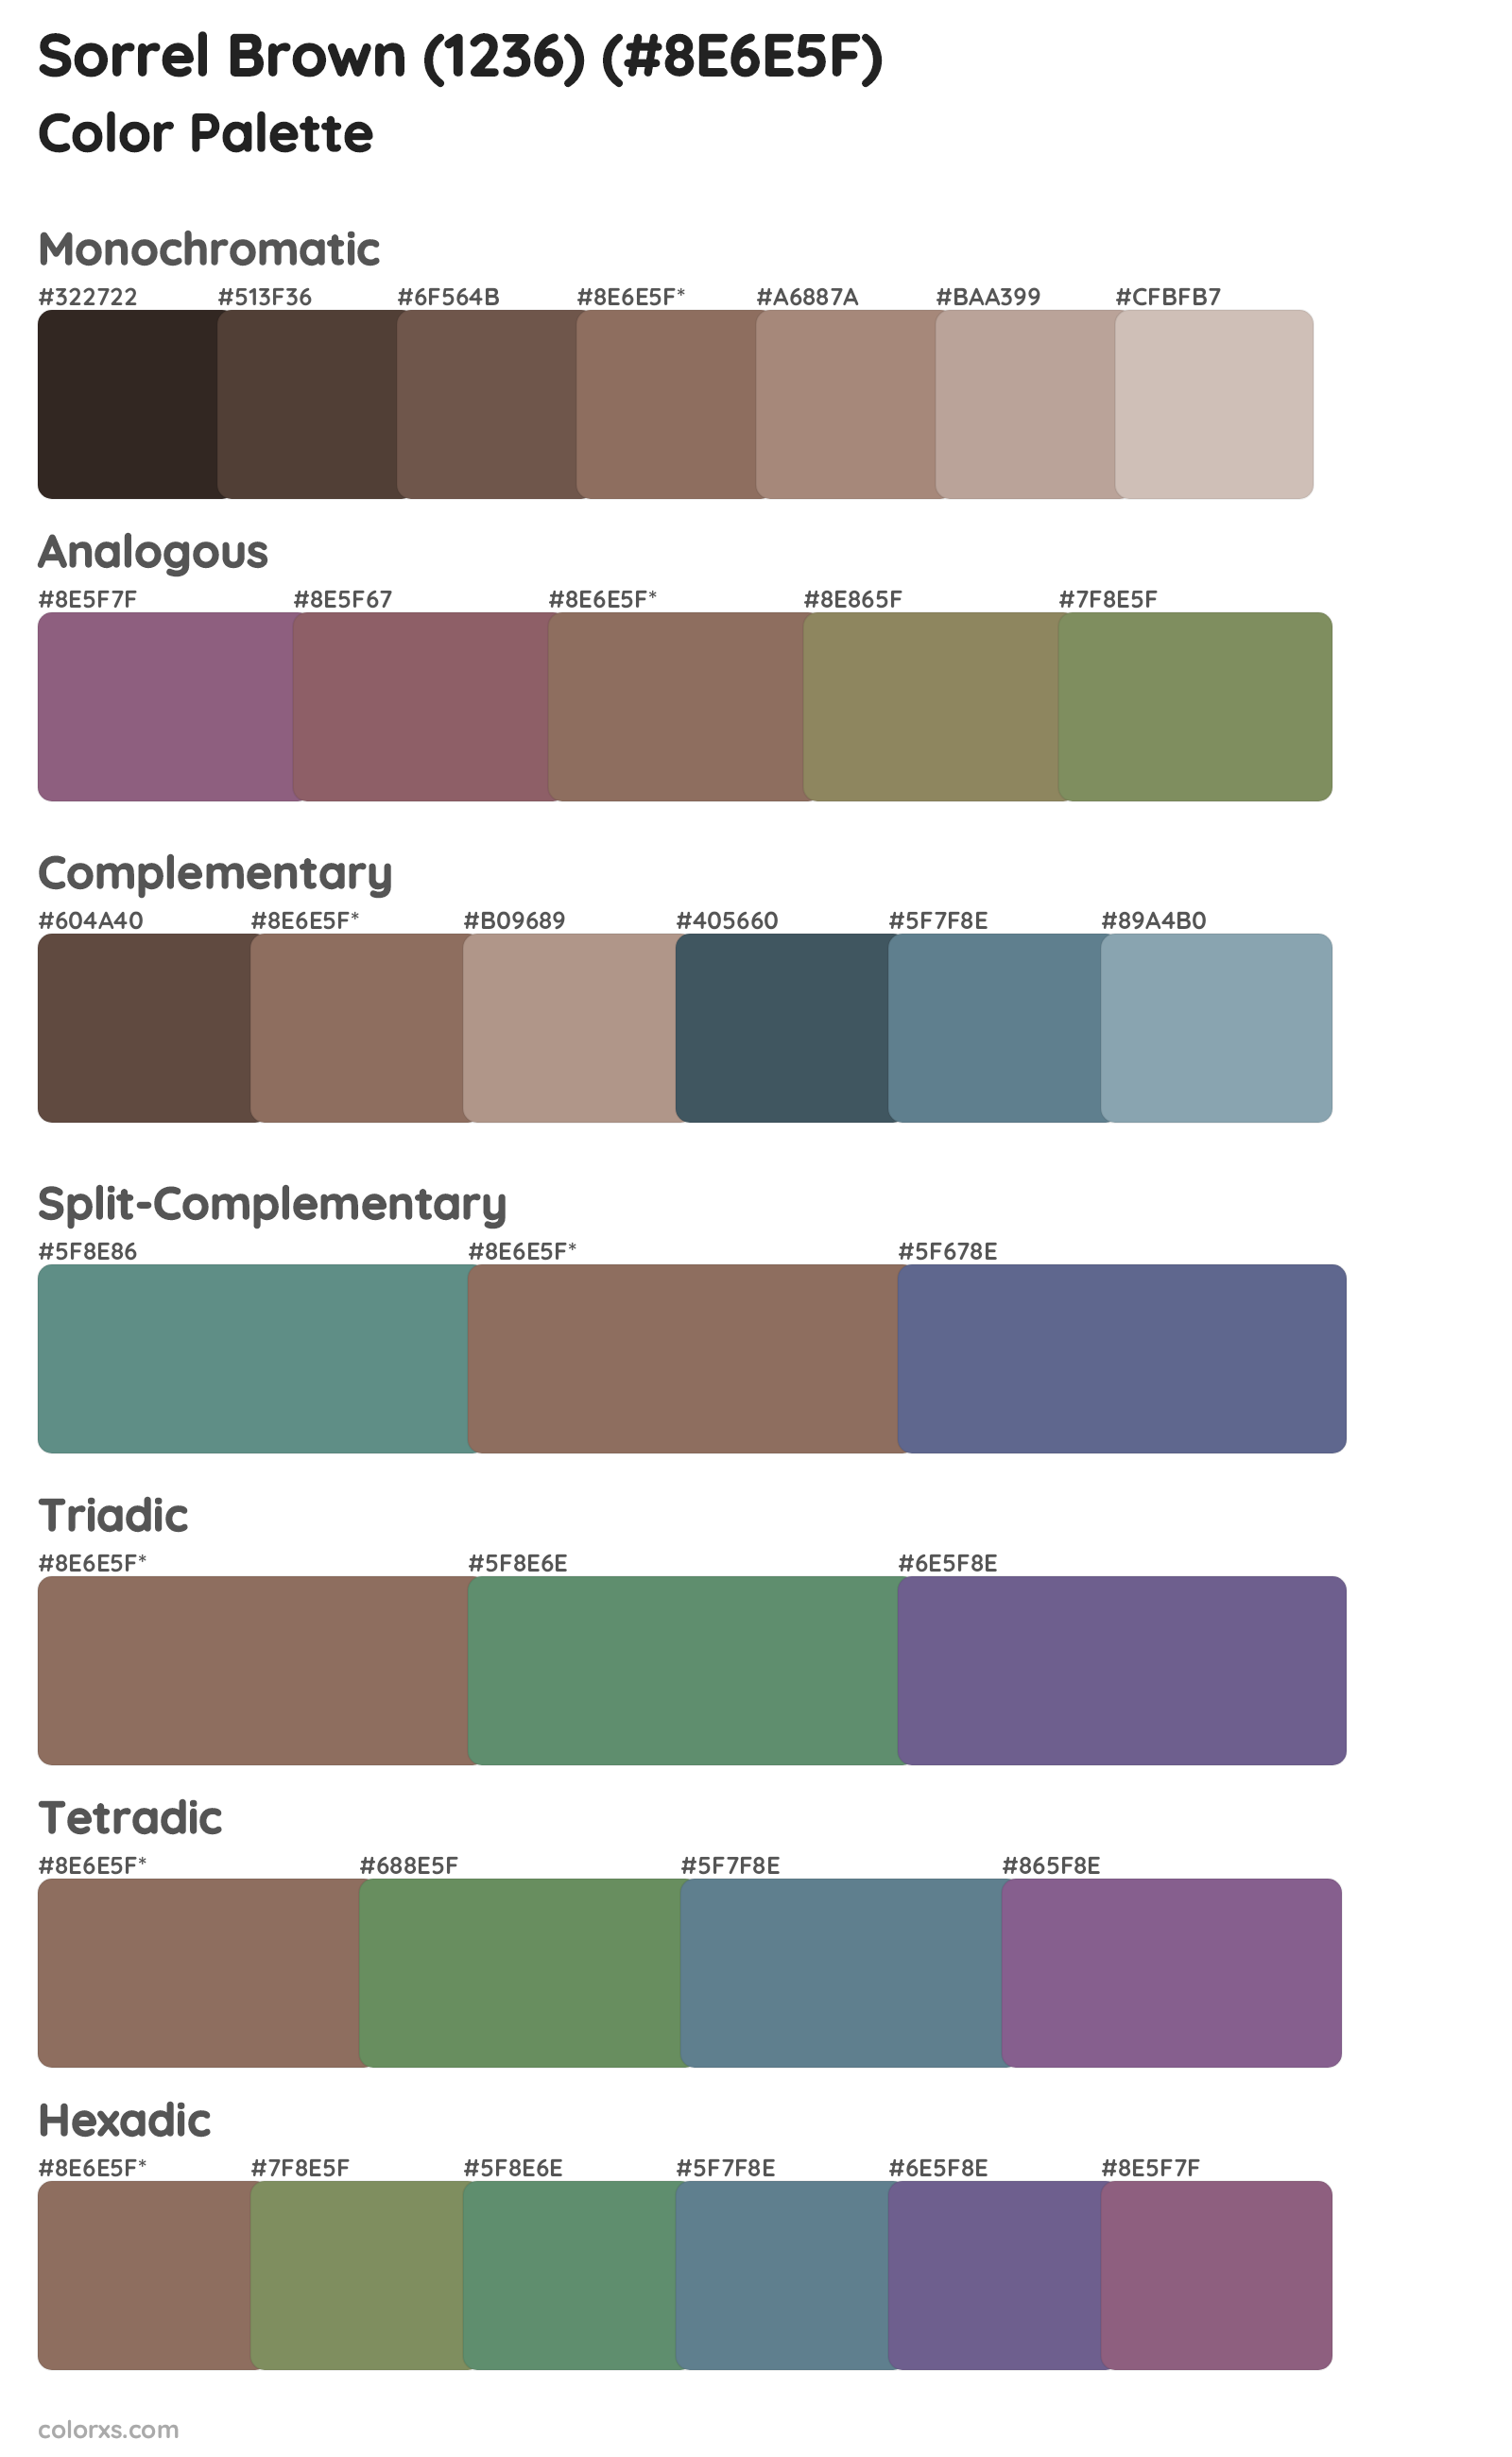 Sorrel Brown (1236) Color Scheme Palettes